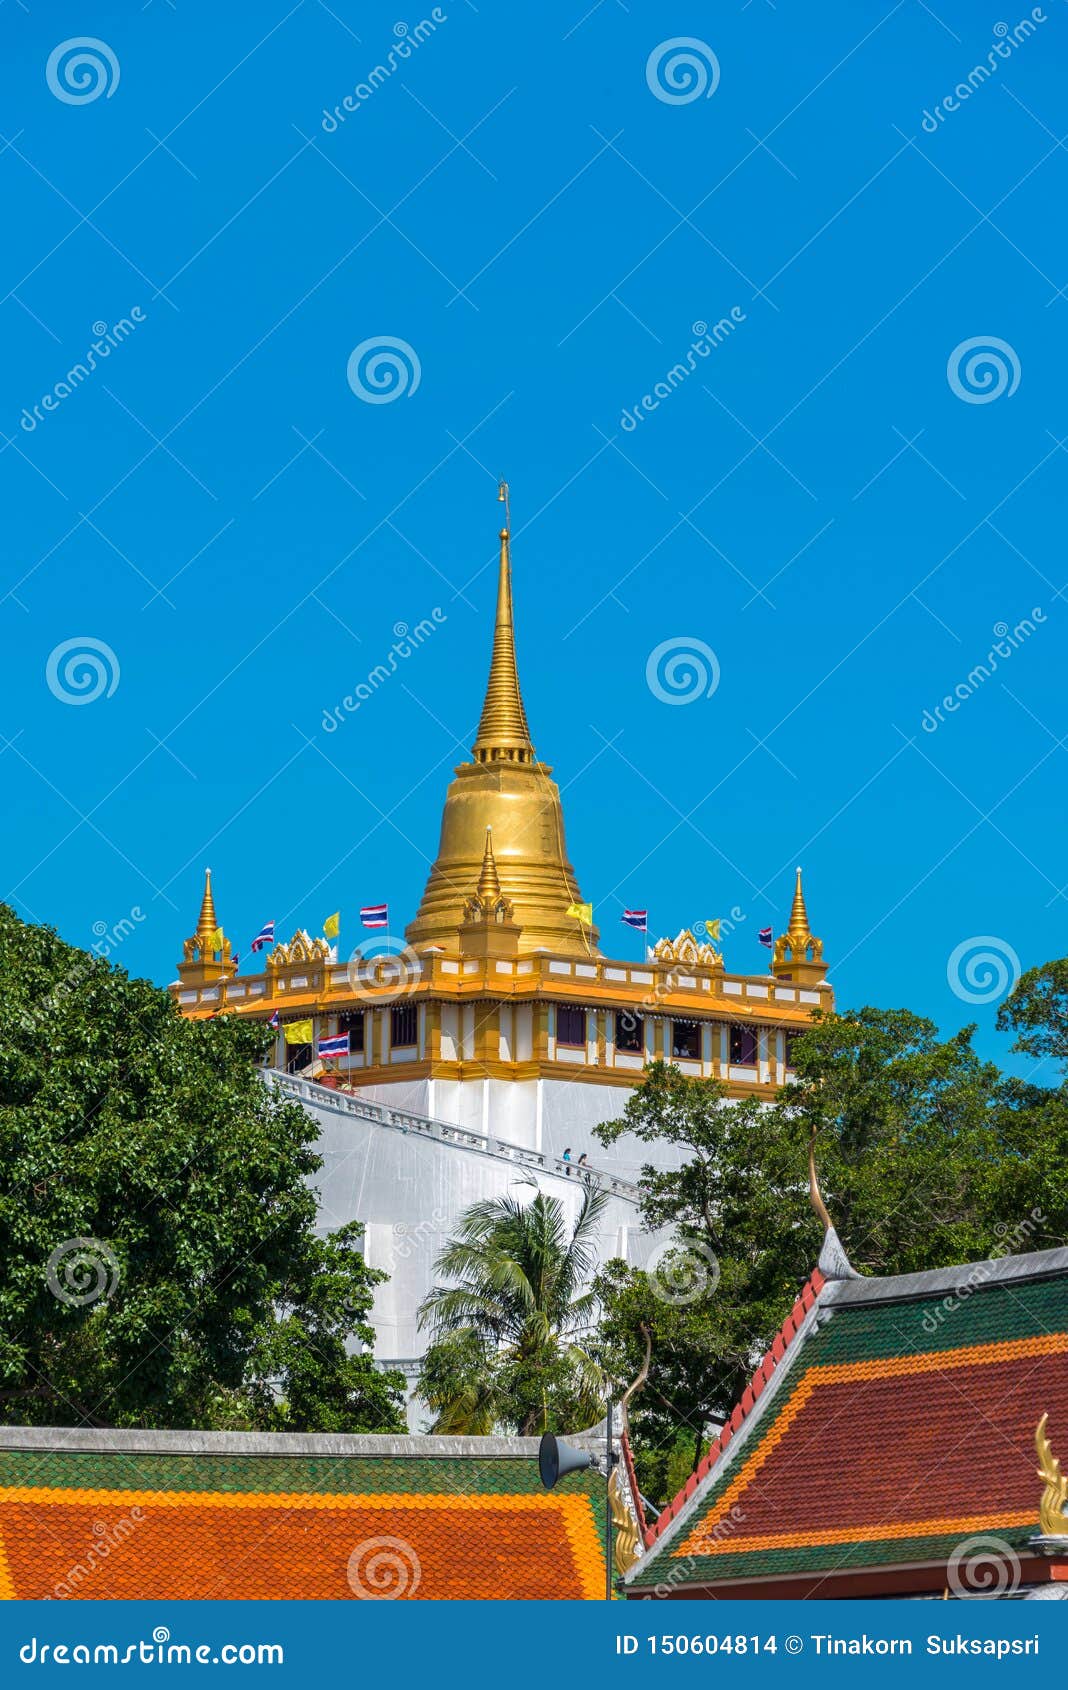 Golden Pagoda Or Golden Mountain Temple Tourist Attraction Images, Photos, Reviews